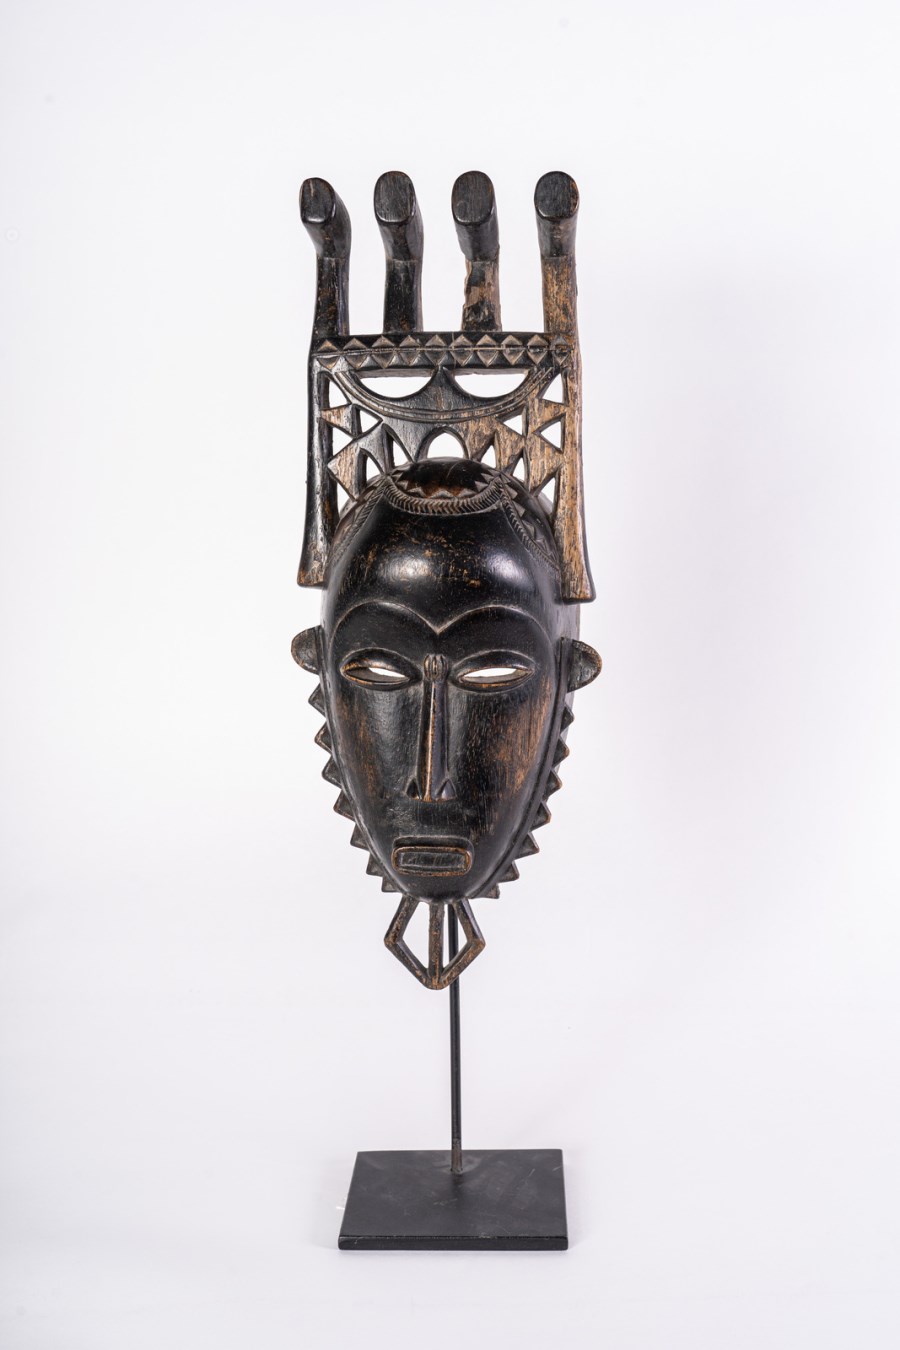 Maschera ritratto mblo, Baule
Costa d'Avorio  (Arte Africana )